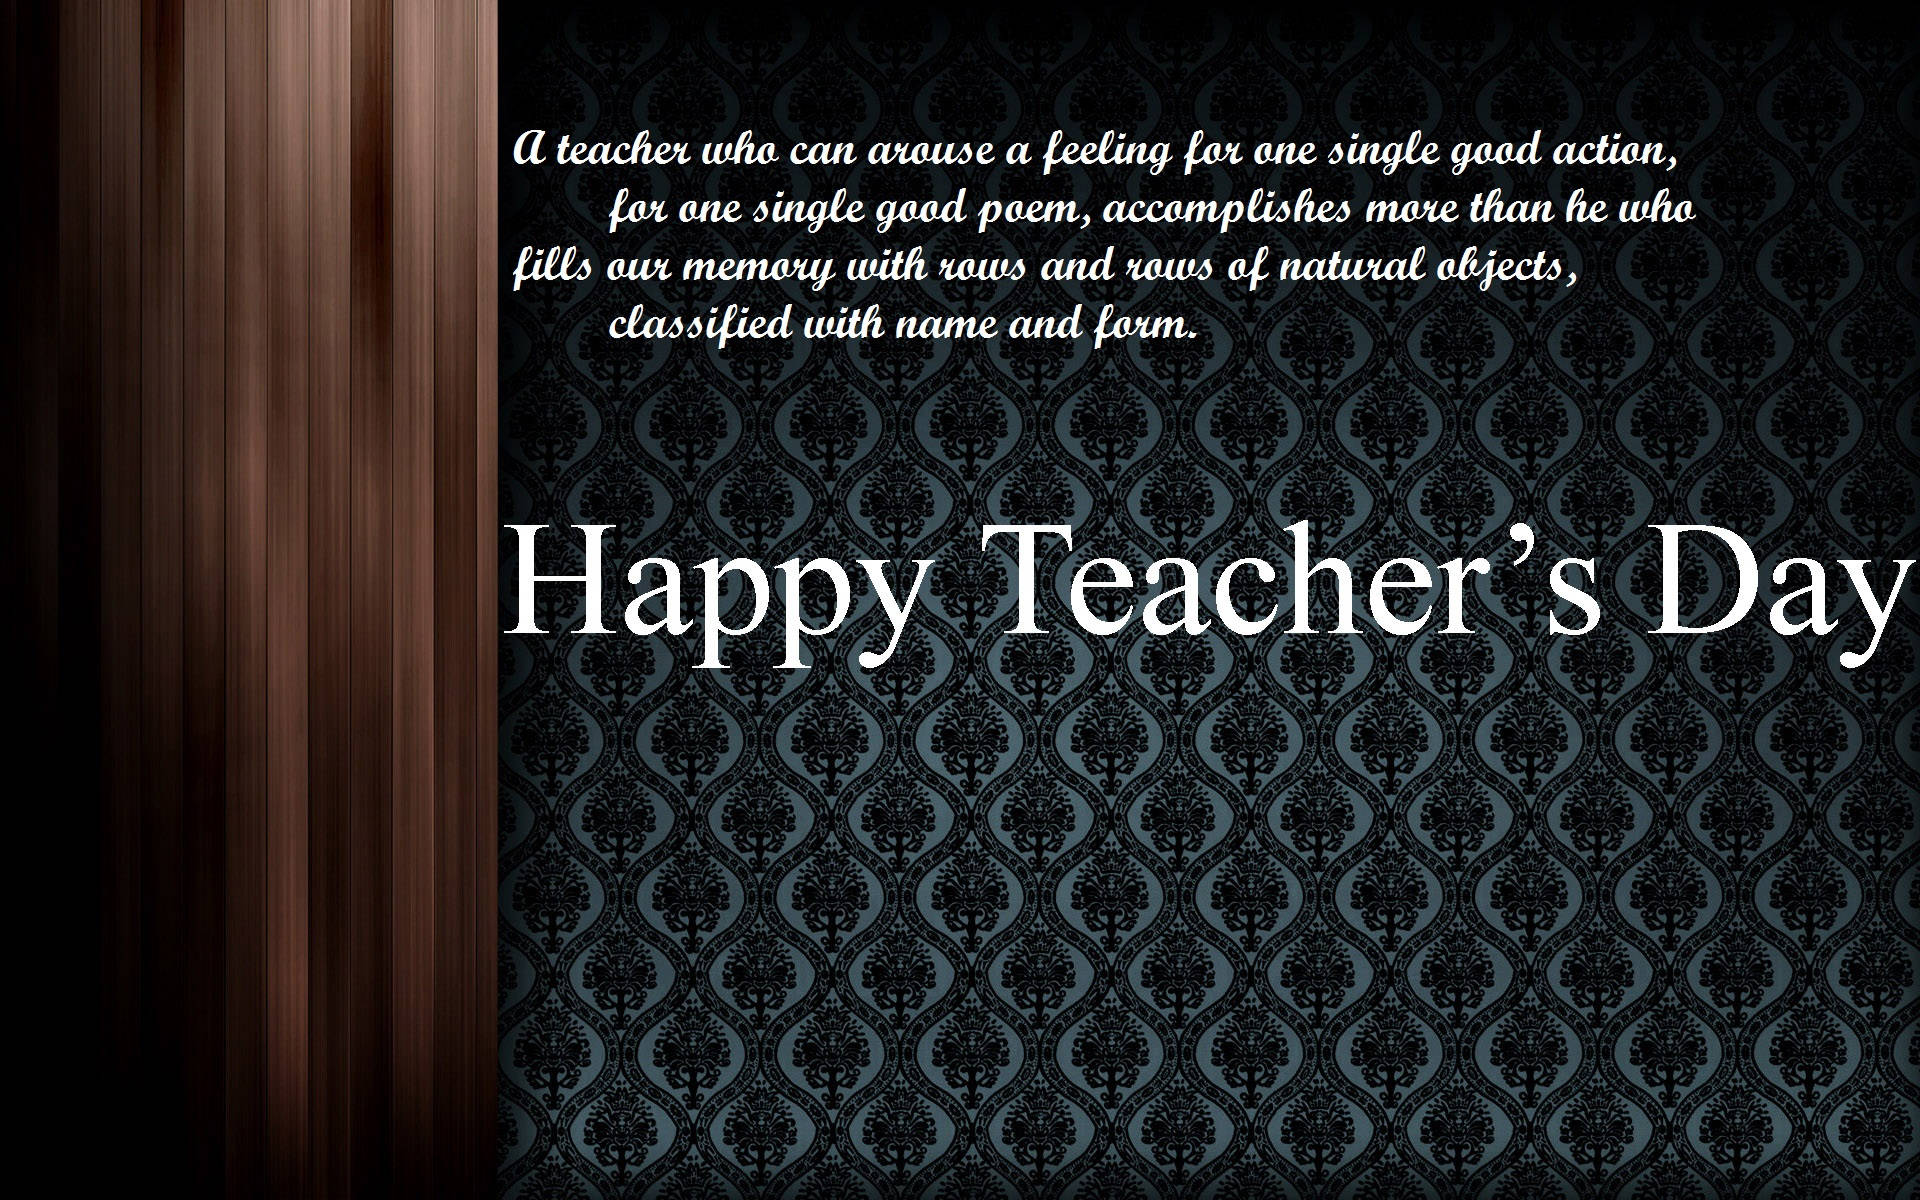 Happy Teachers' Day Good Action